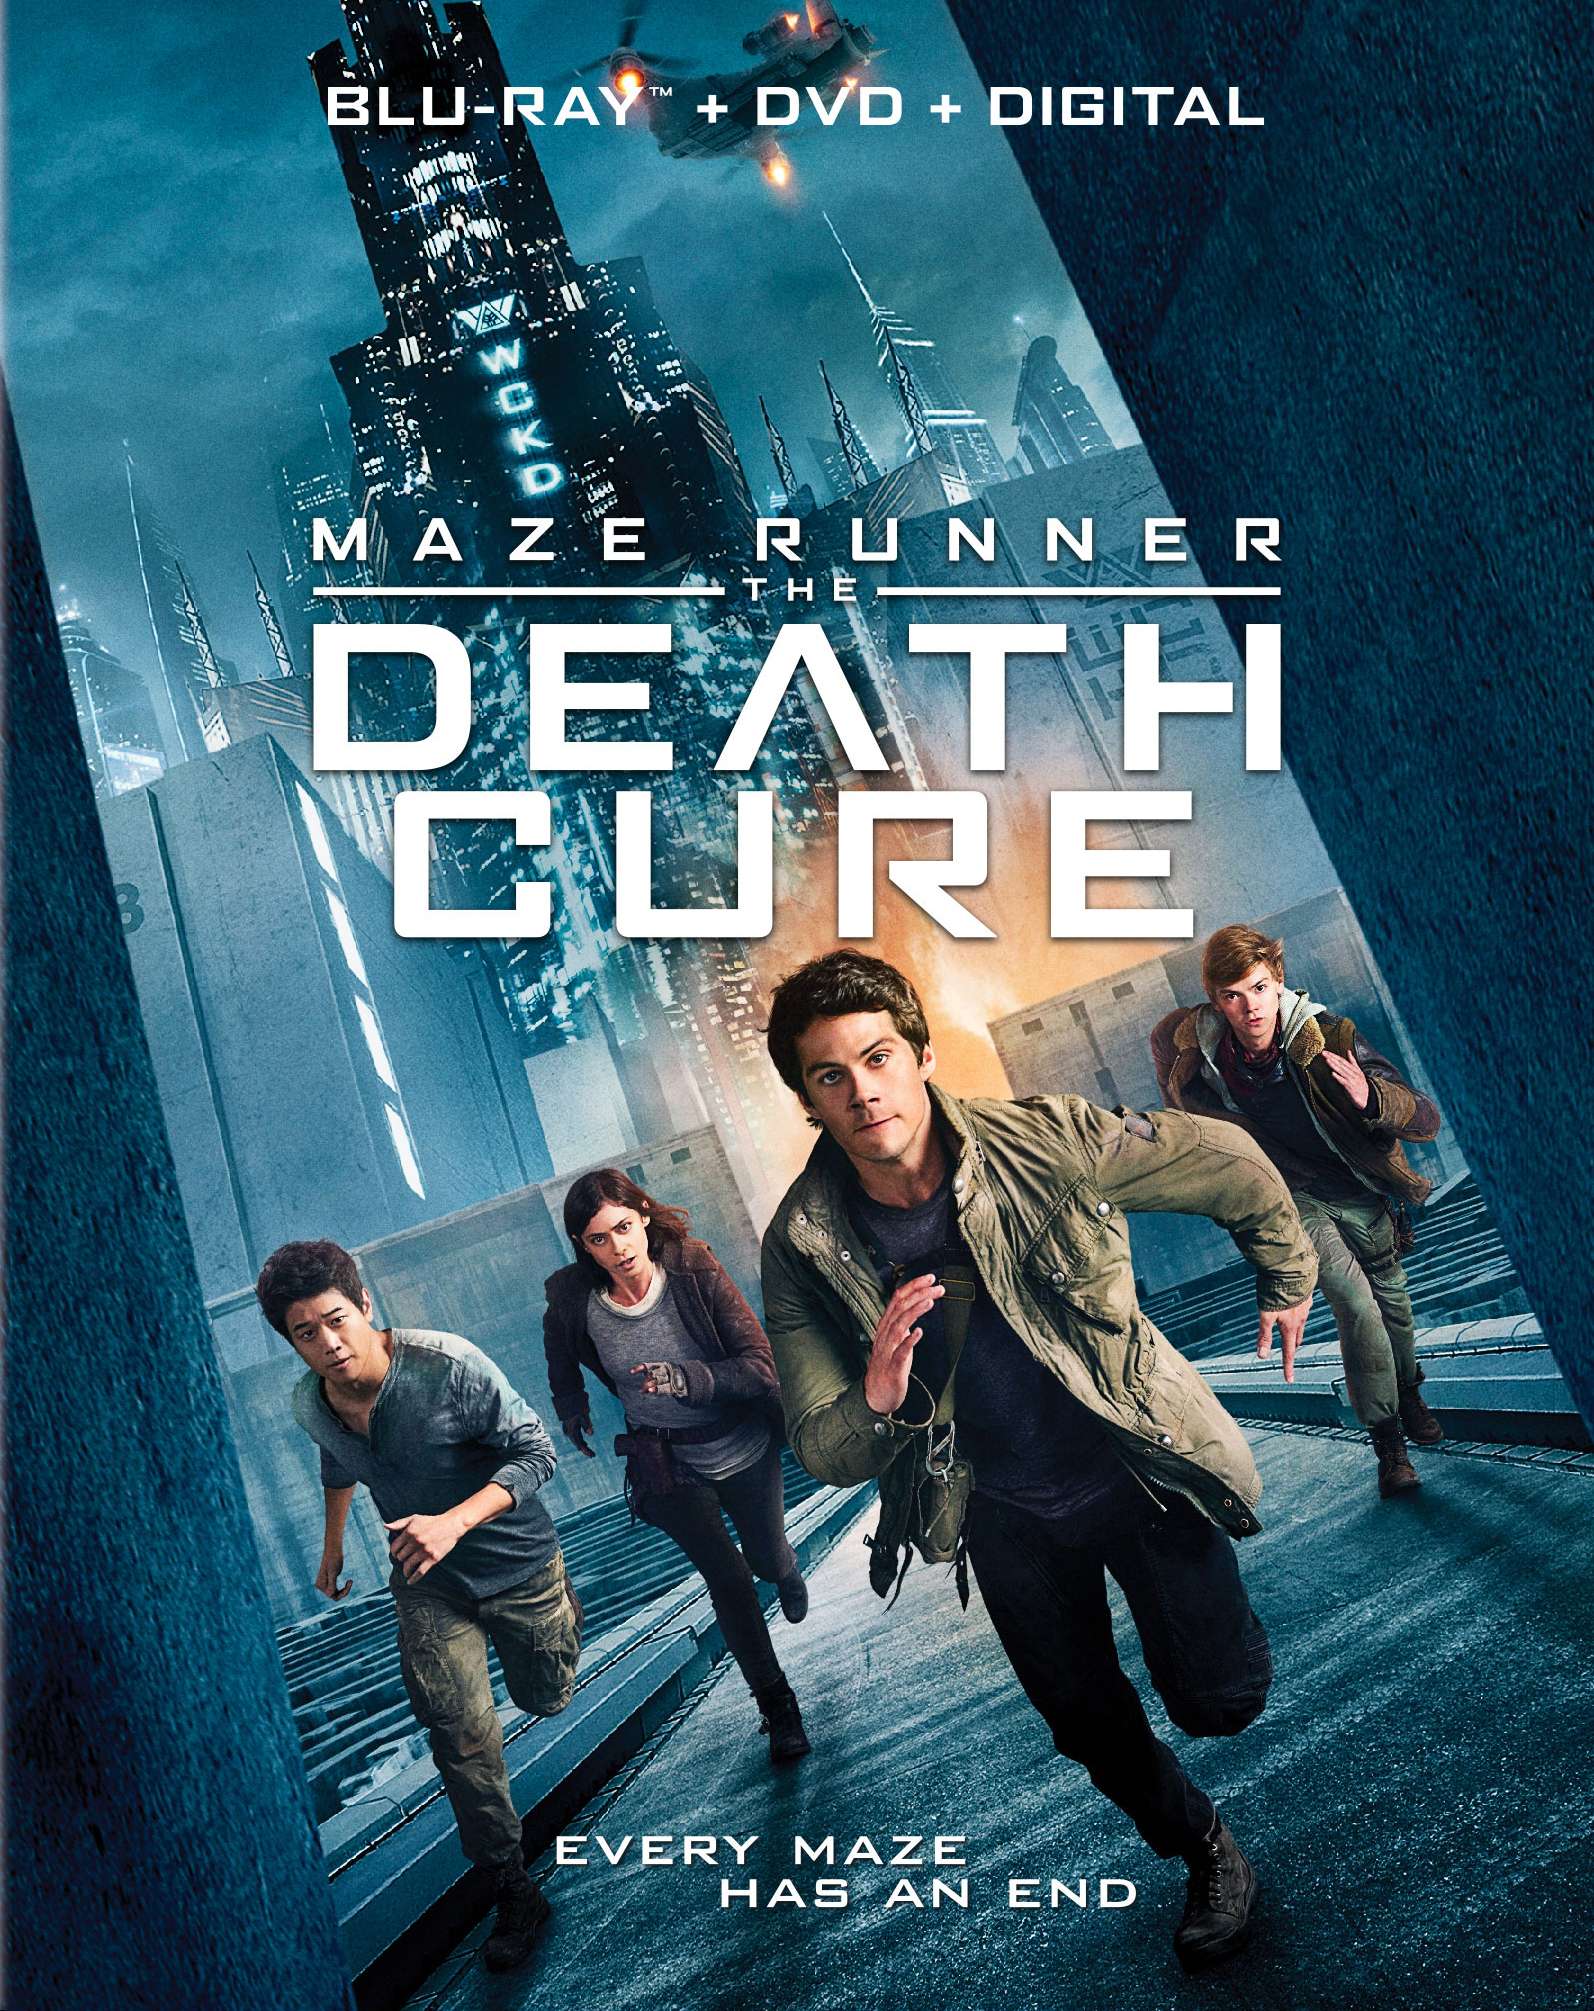 Best Buy: The Maze Runner [2 Discs] [Includes Digital Copy] [Blu-ray] [2014]